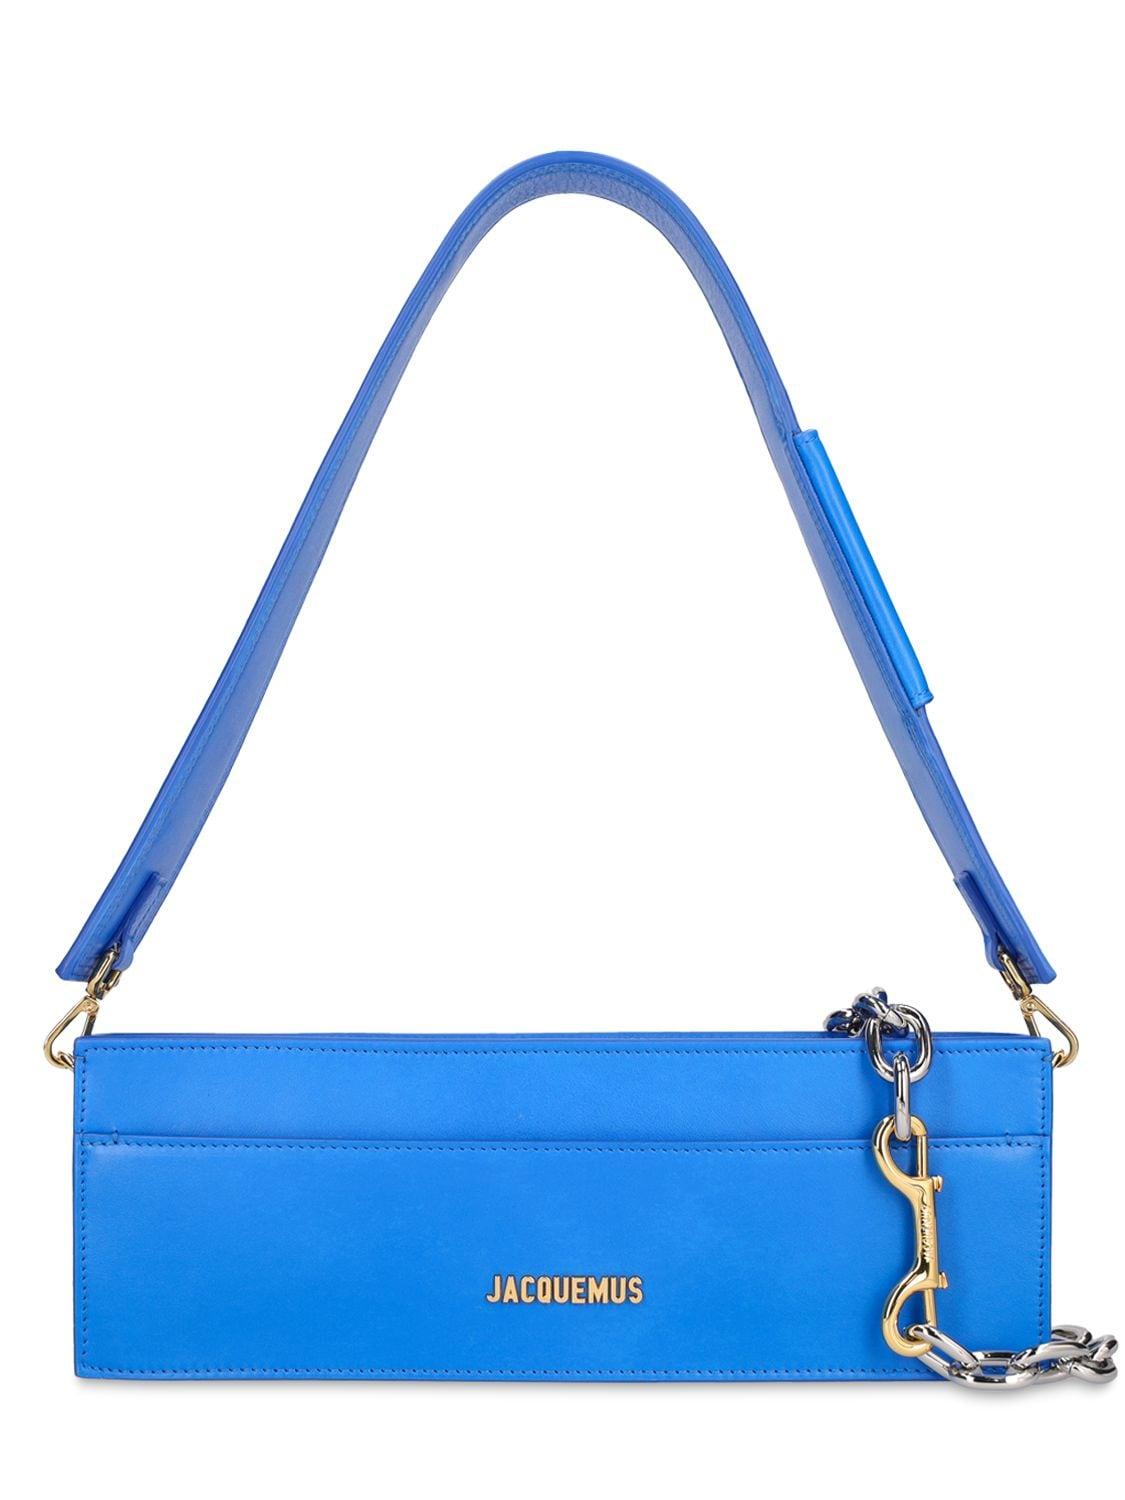 Jacquemus Le Ciuciu Leather Shoulder Bag in Blue | Lyst